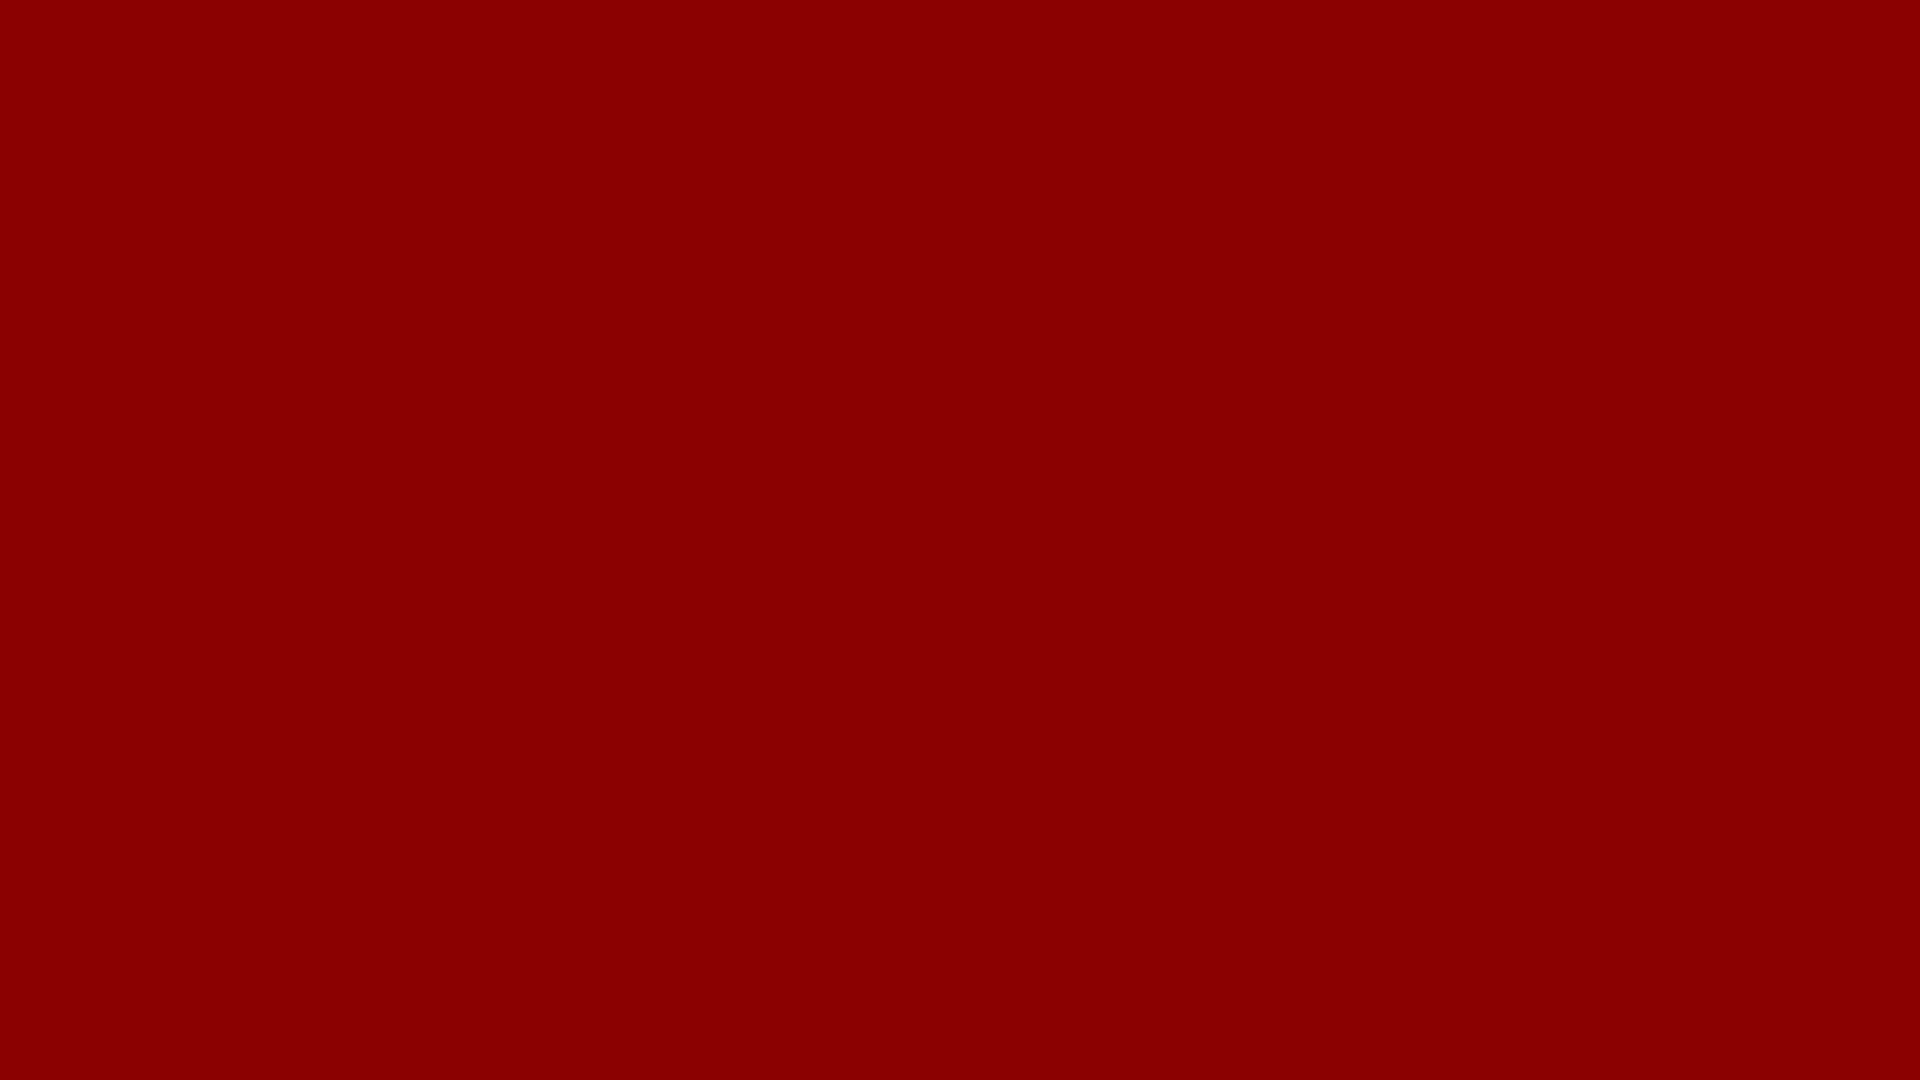 1920x1080-dark-red-solid-color-background.jpg